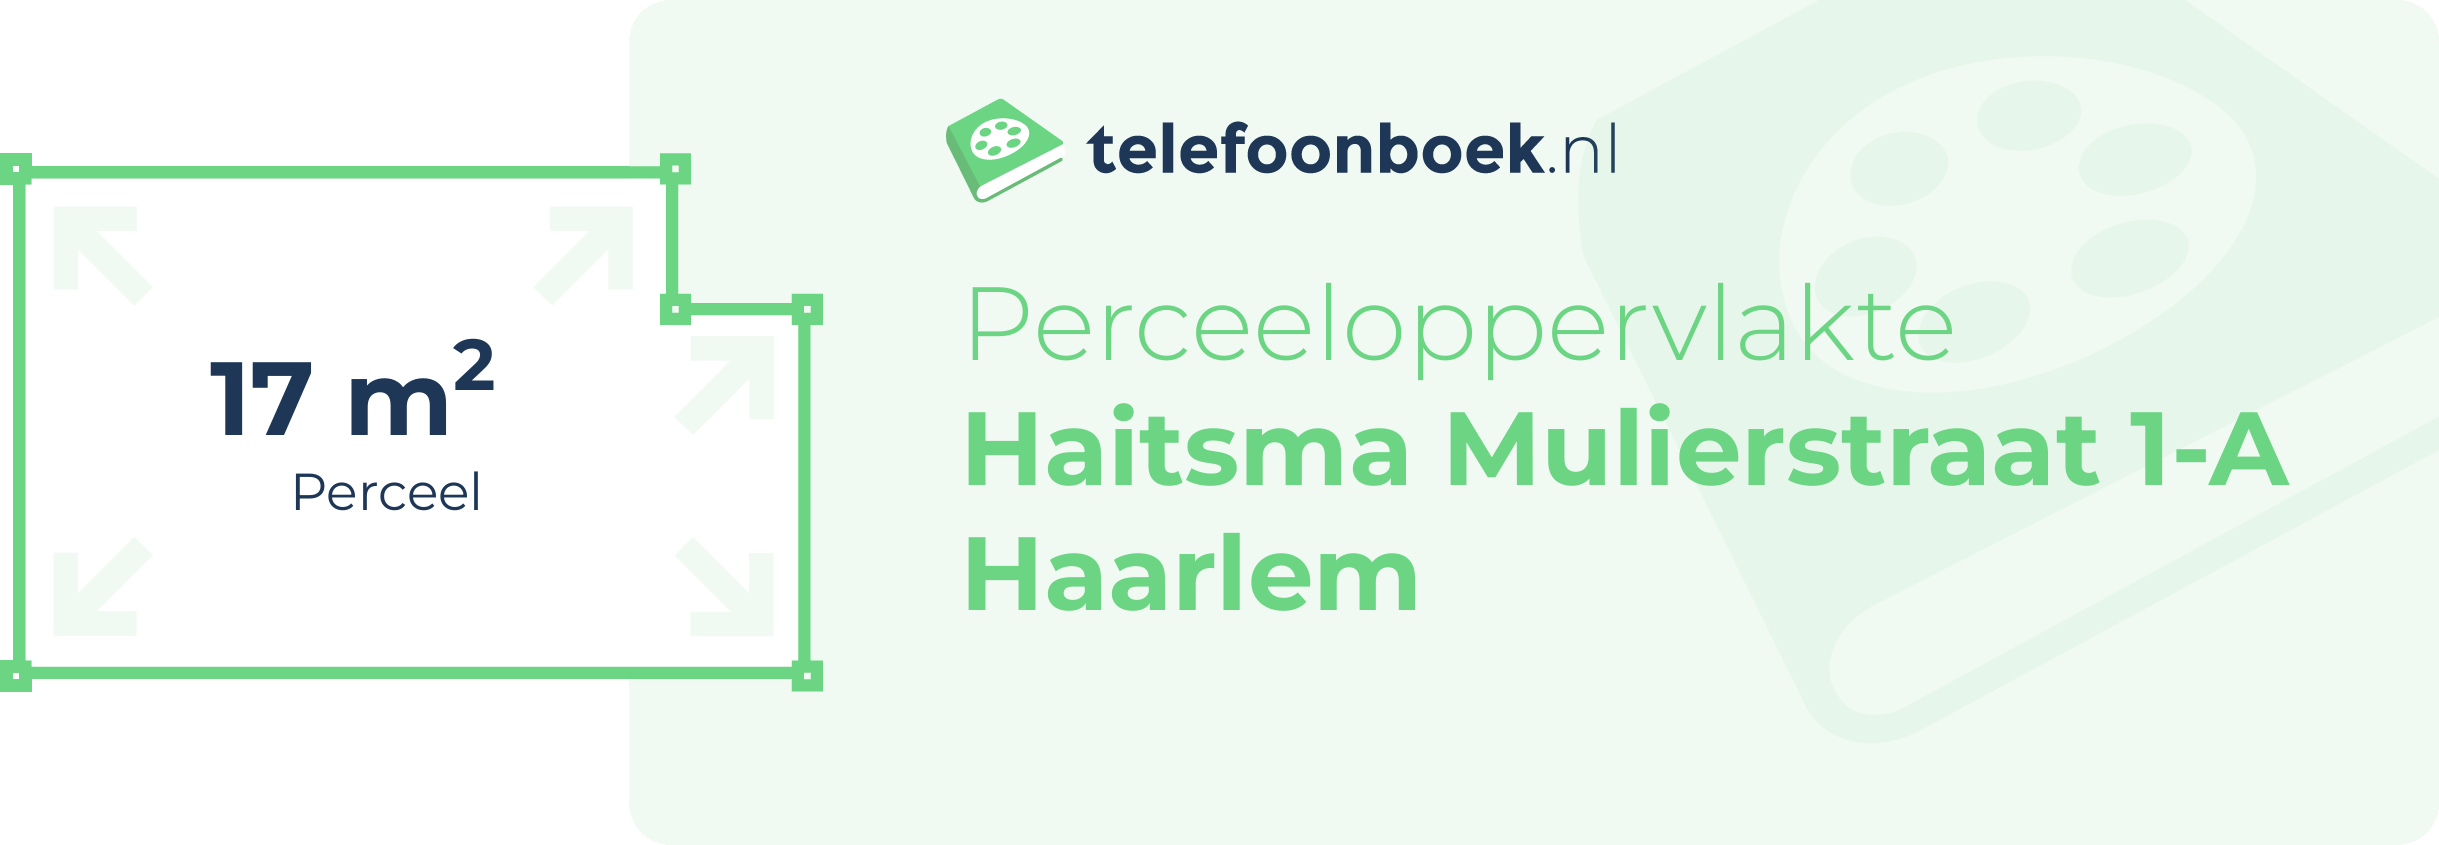 Perceeloppervlakte Haitsma Mulierstraat 1-A Haarlem